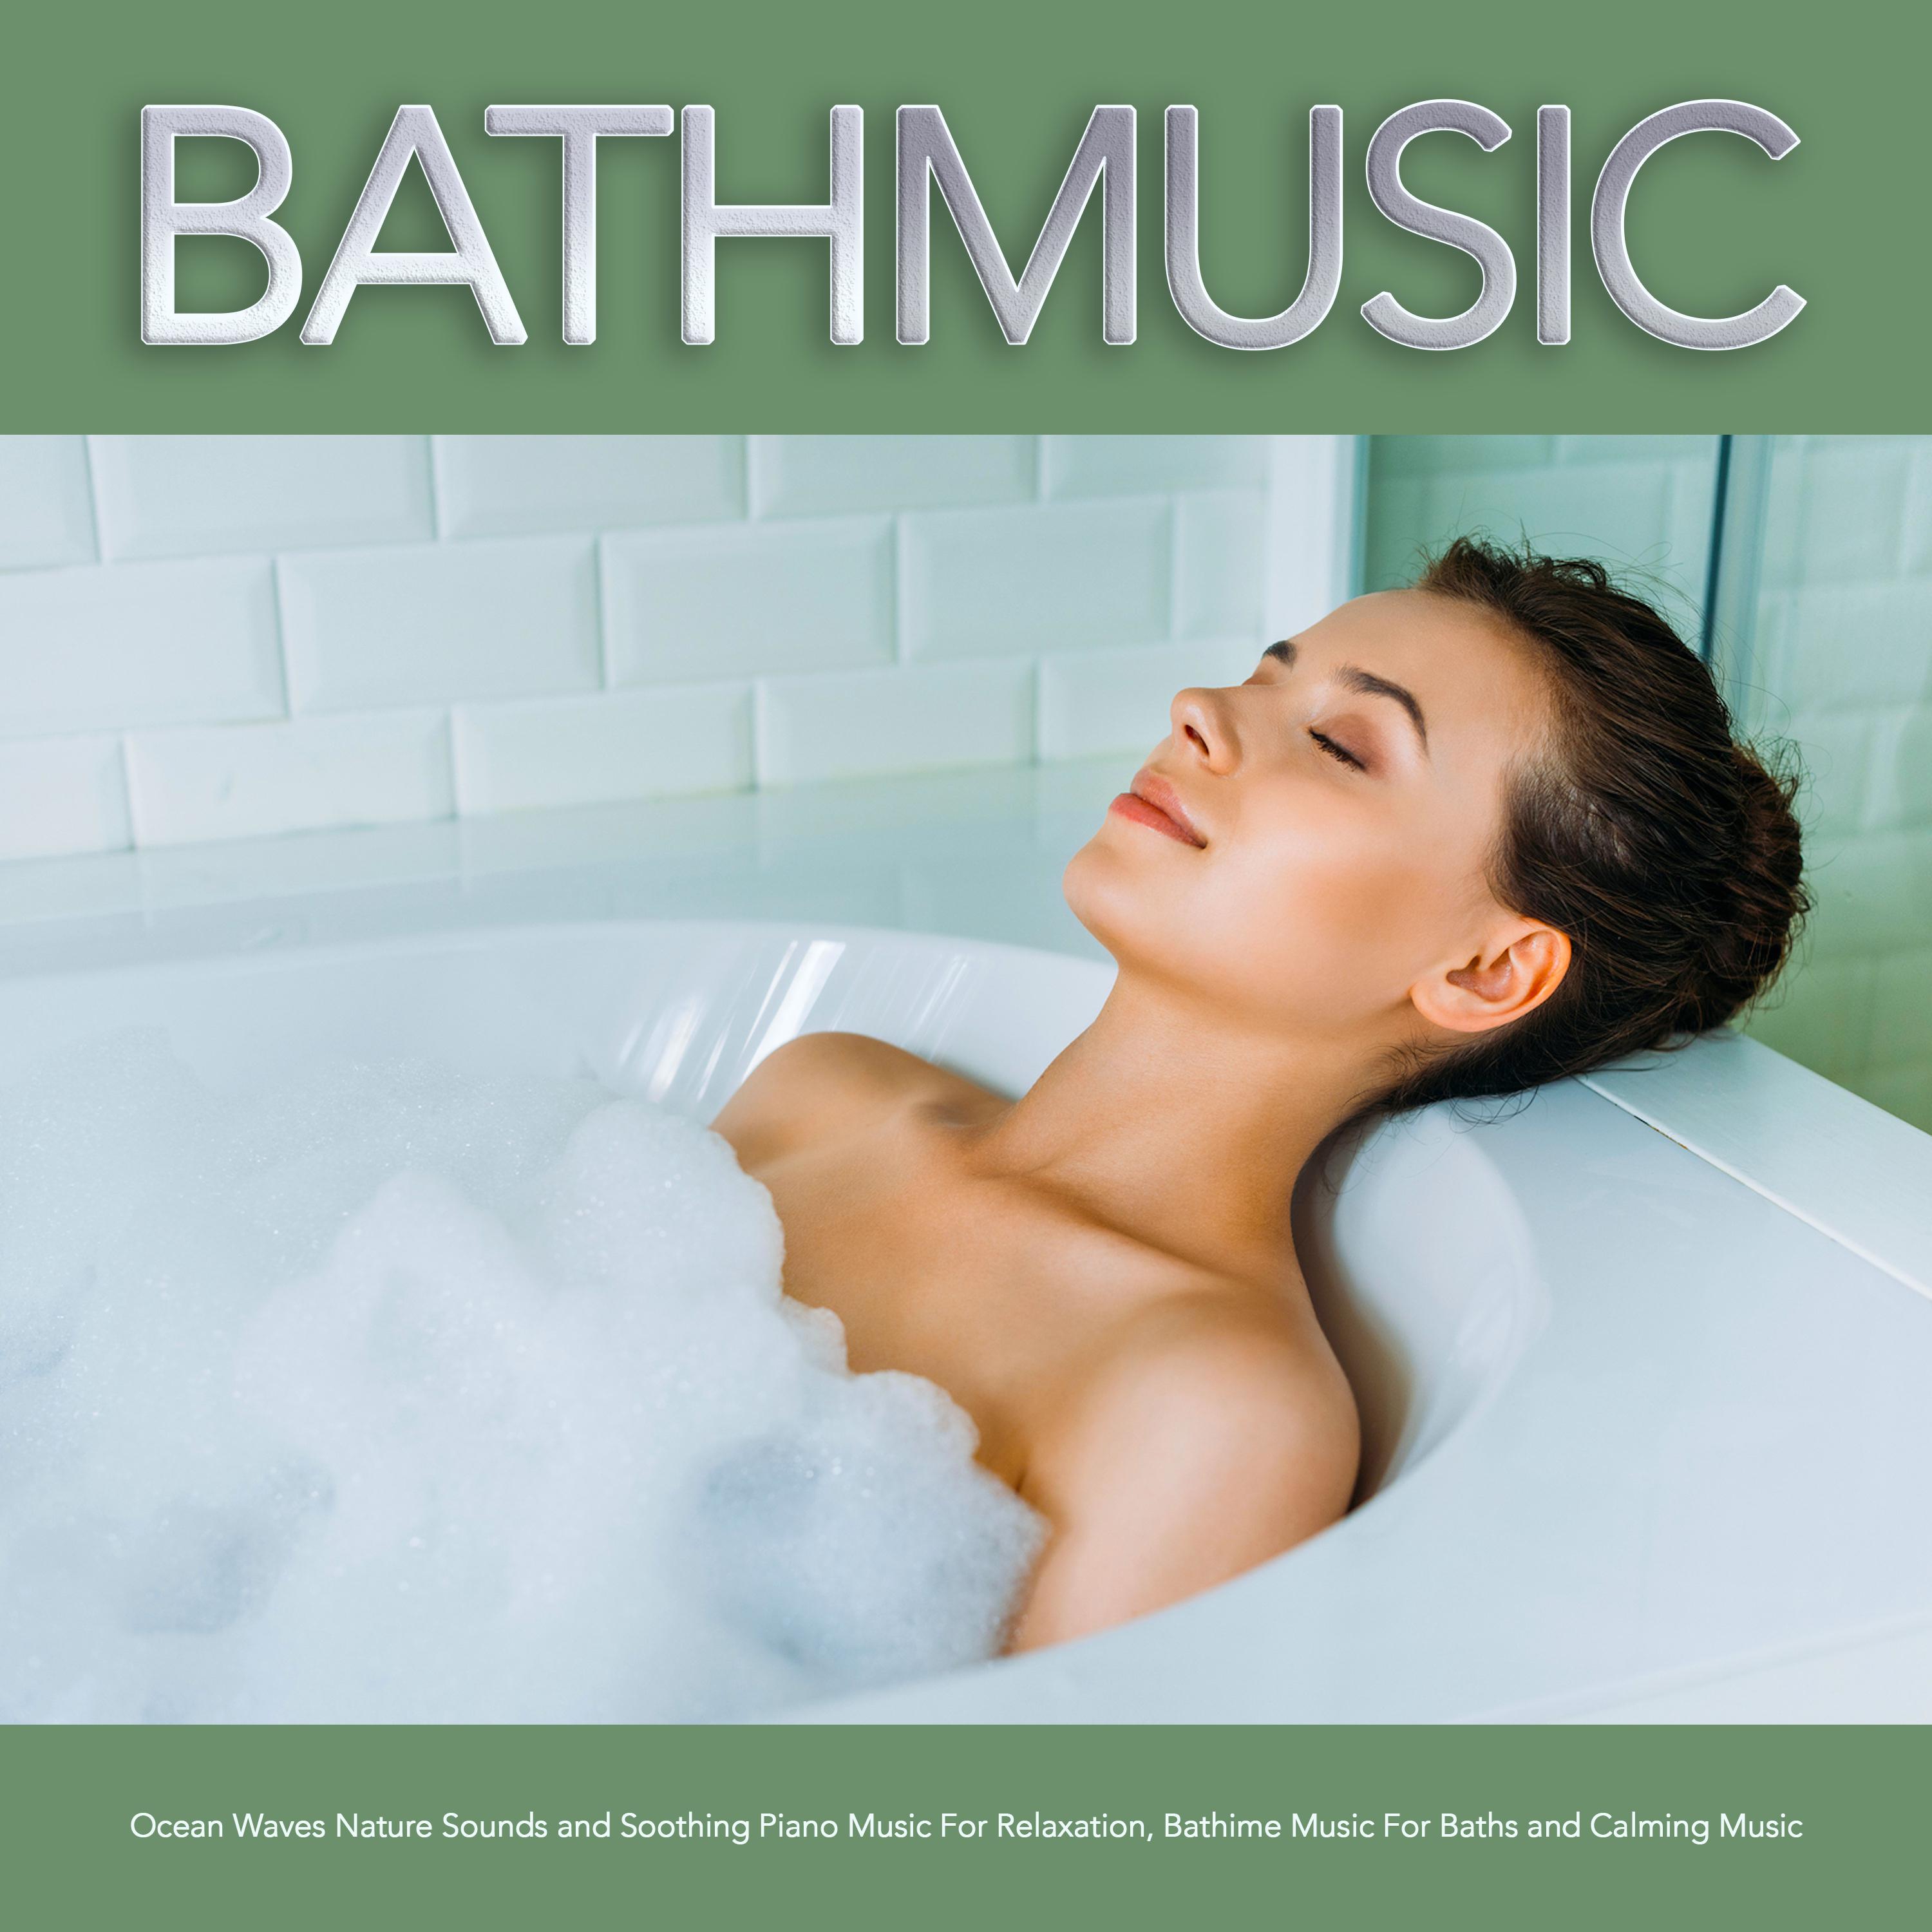 Bathtime Music